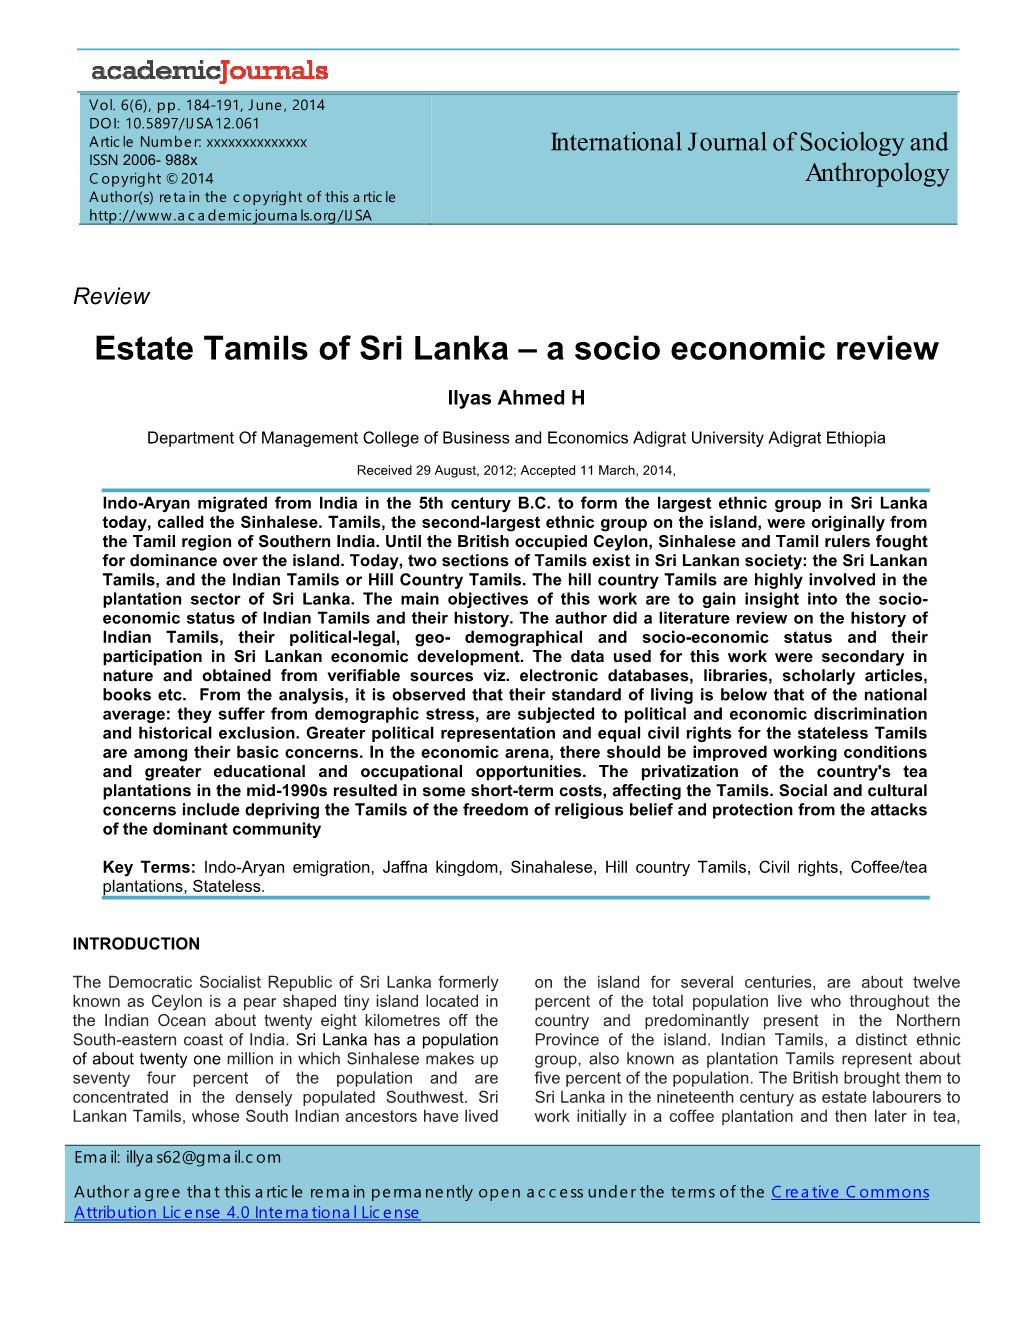 Estate Tamils of Sri Lanka – a Socio Economic Review